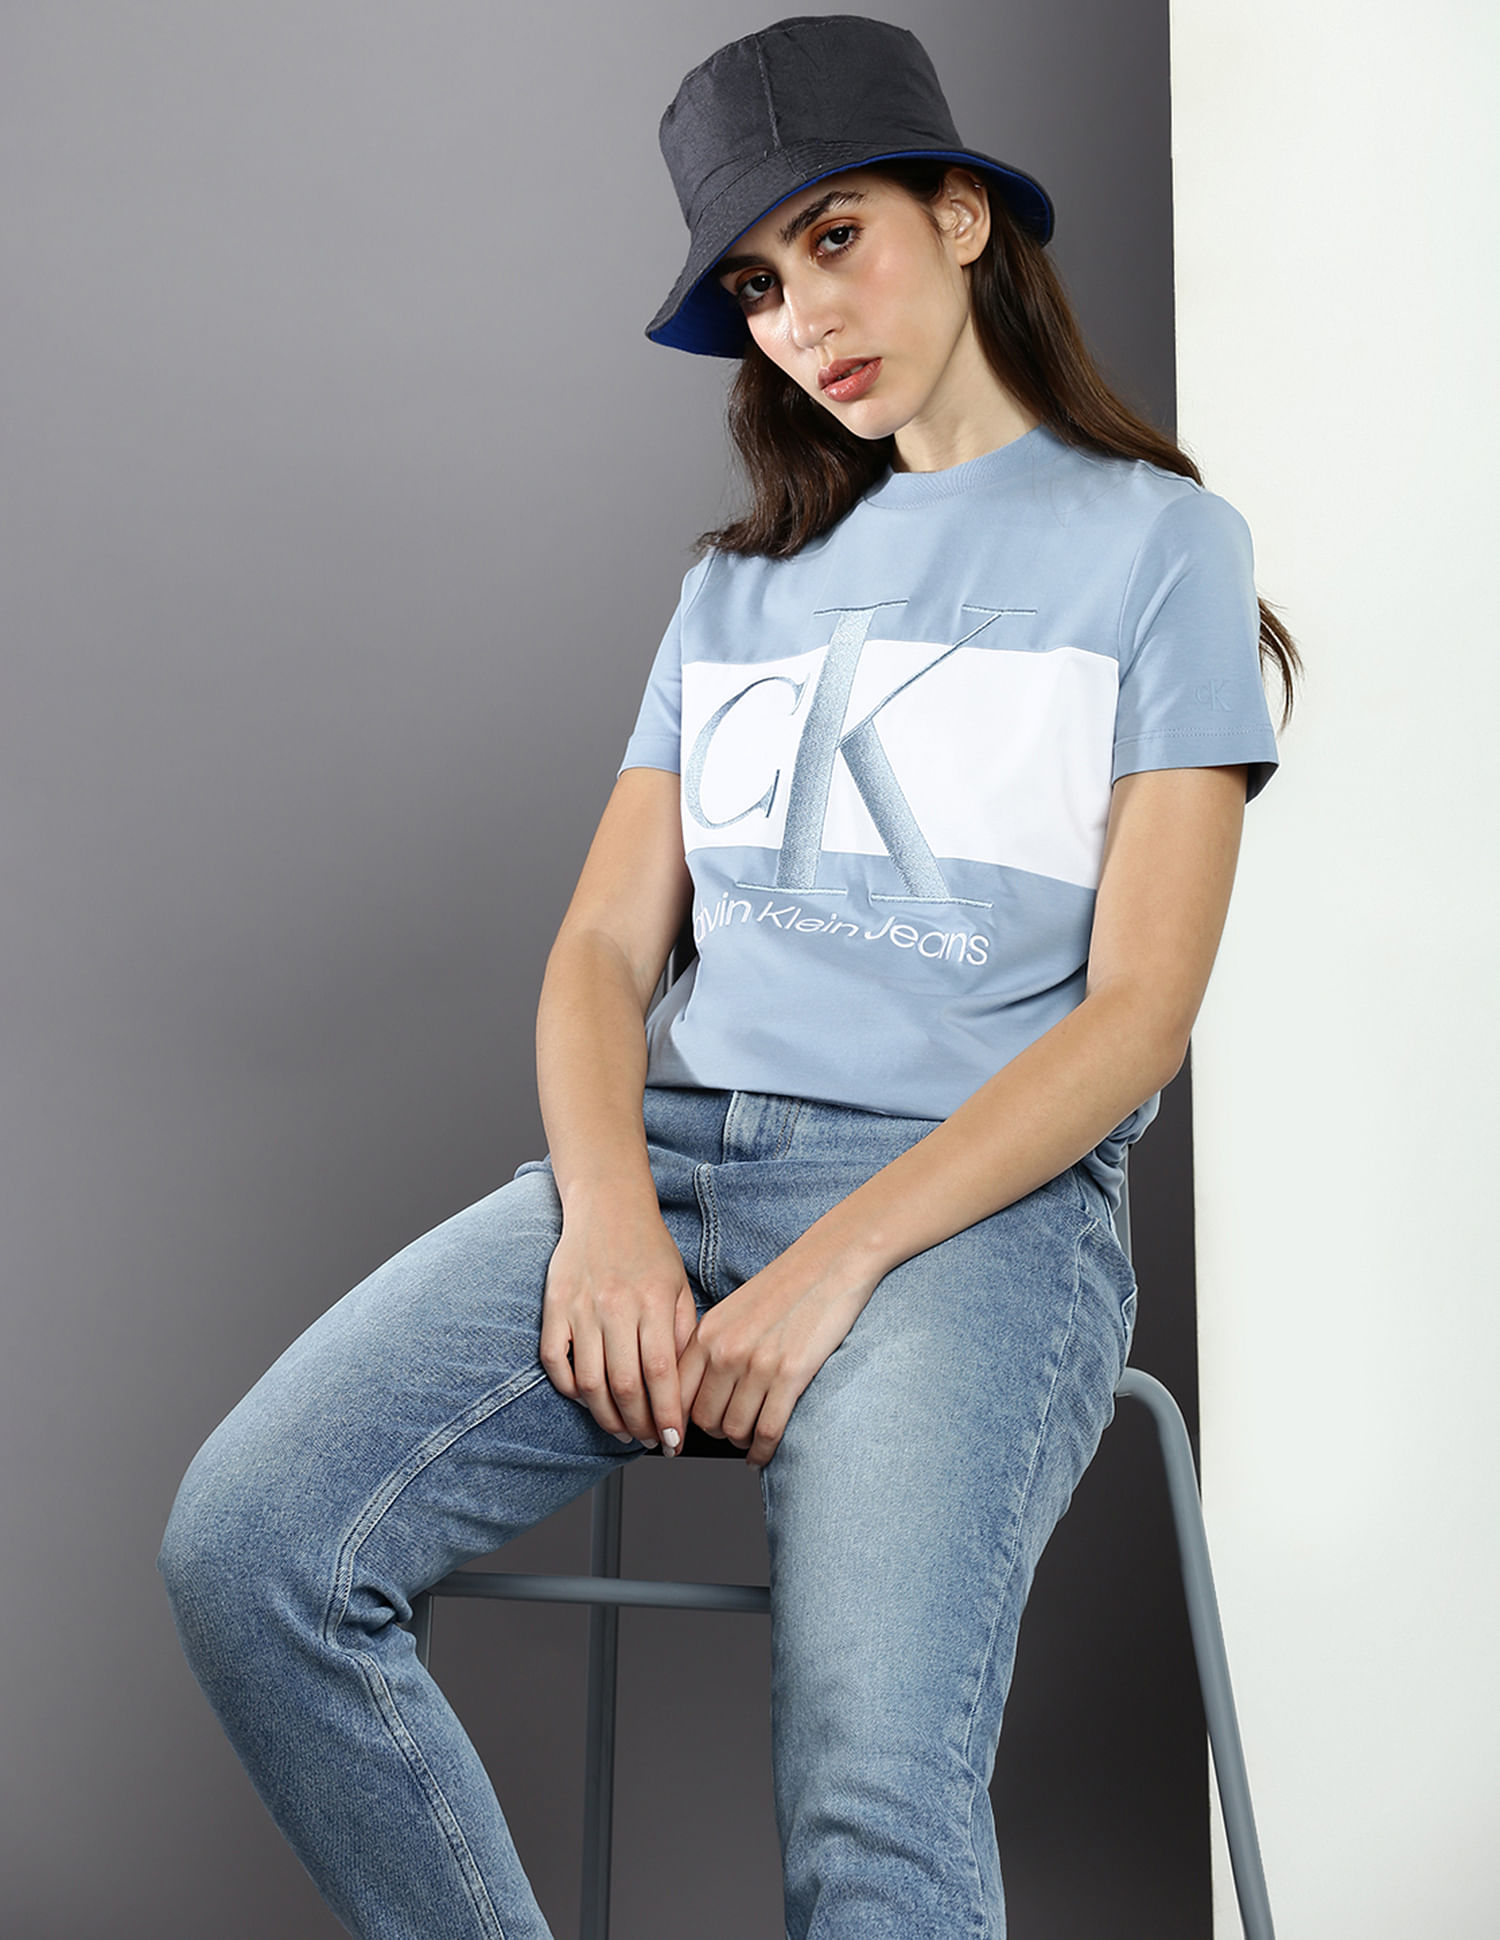 Buy Calvin Klein Women Women White Short Sleeve Logo T-Shirt - NNNOW.com